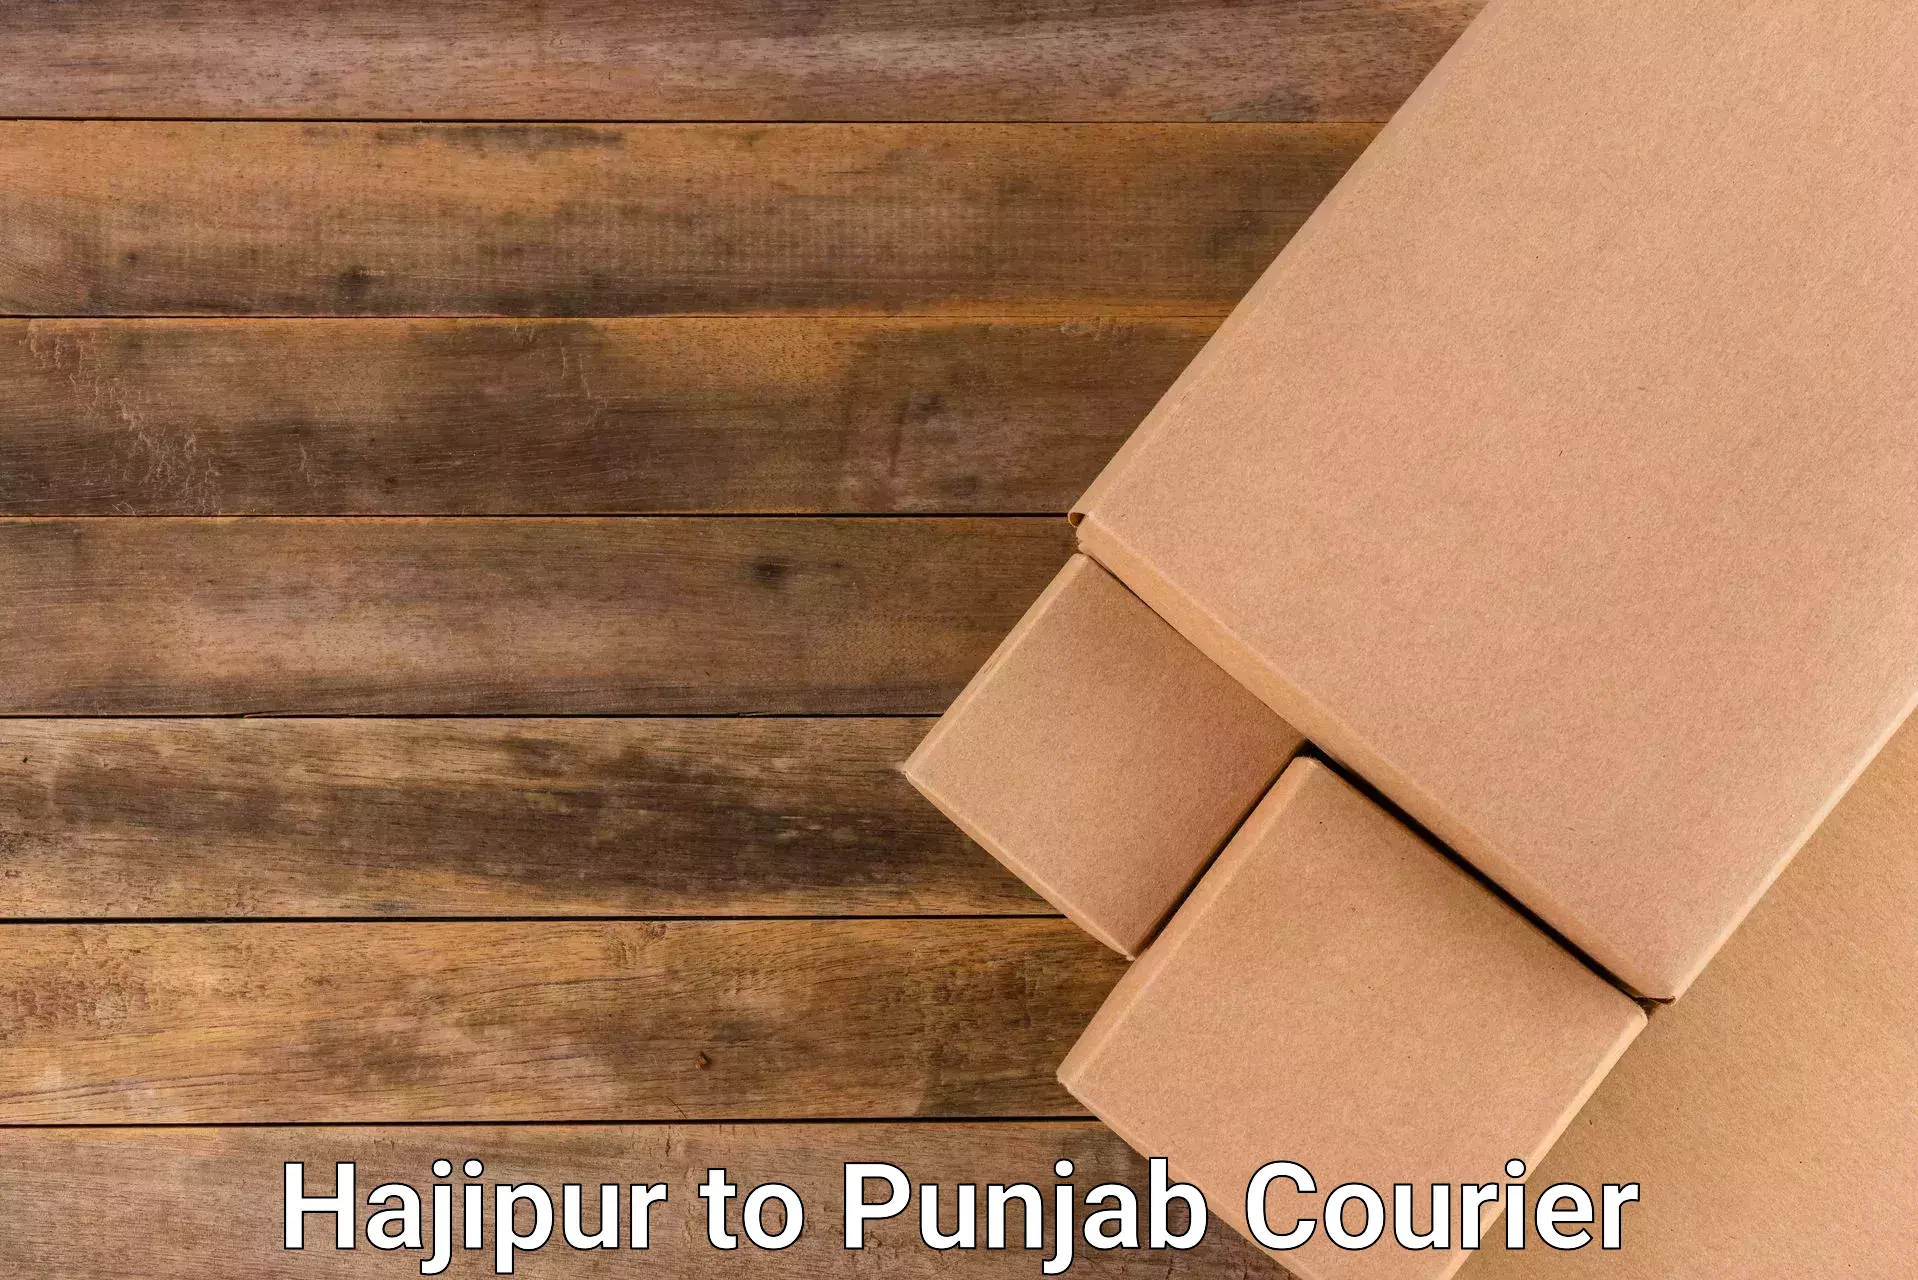 Specialized shipment handling Hajipur to Amritsar